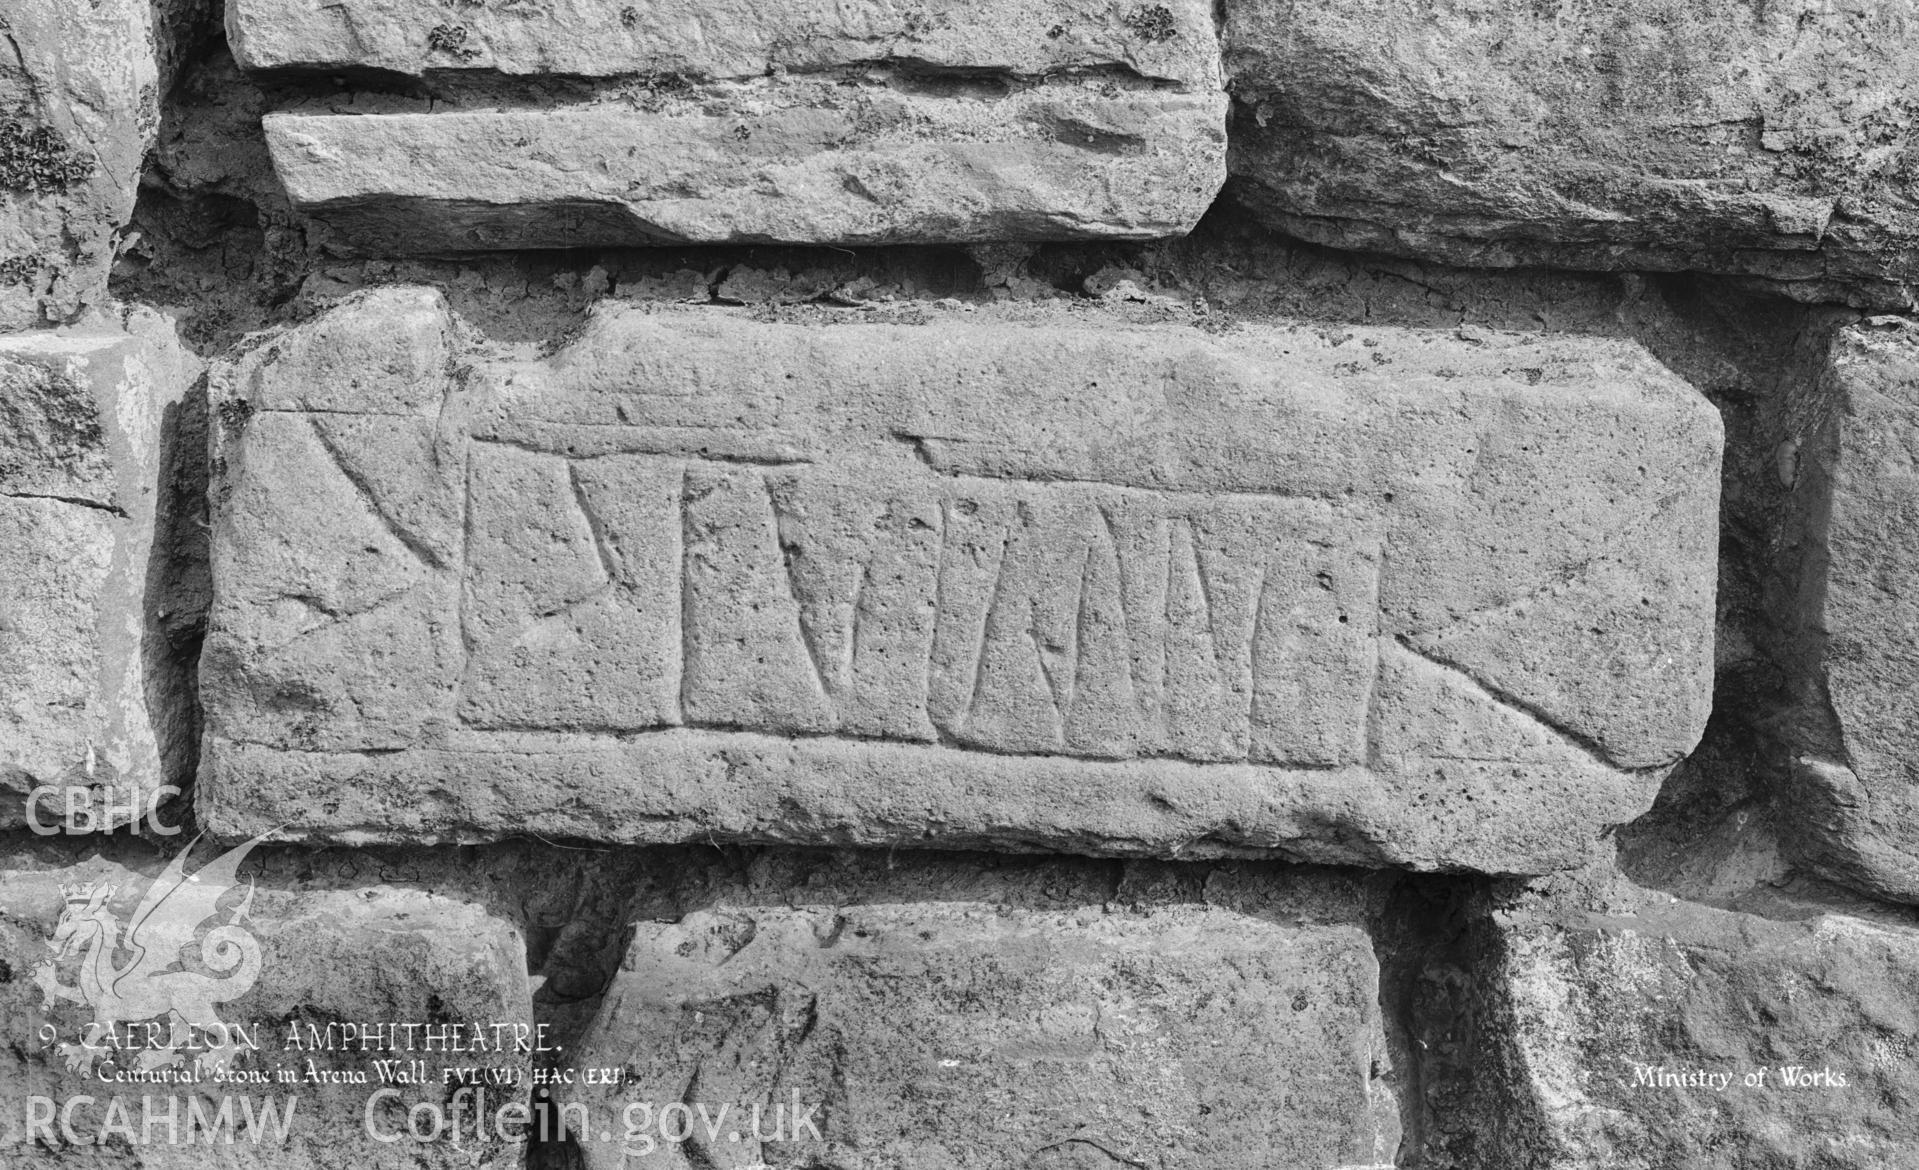 D.O.E photographs of Caerleon Amphitheatre.